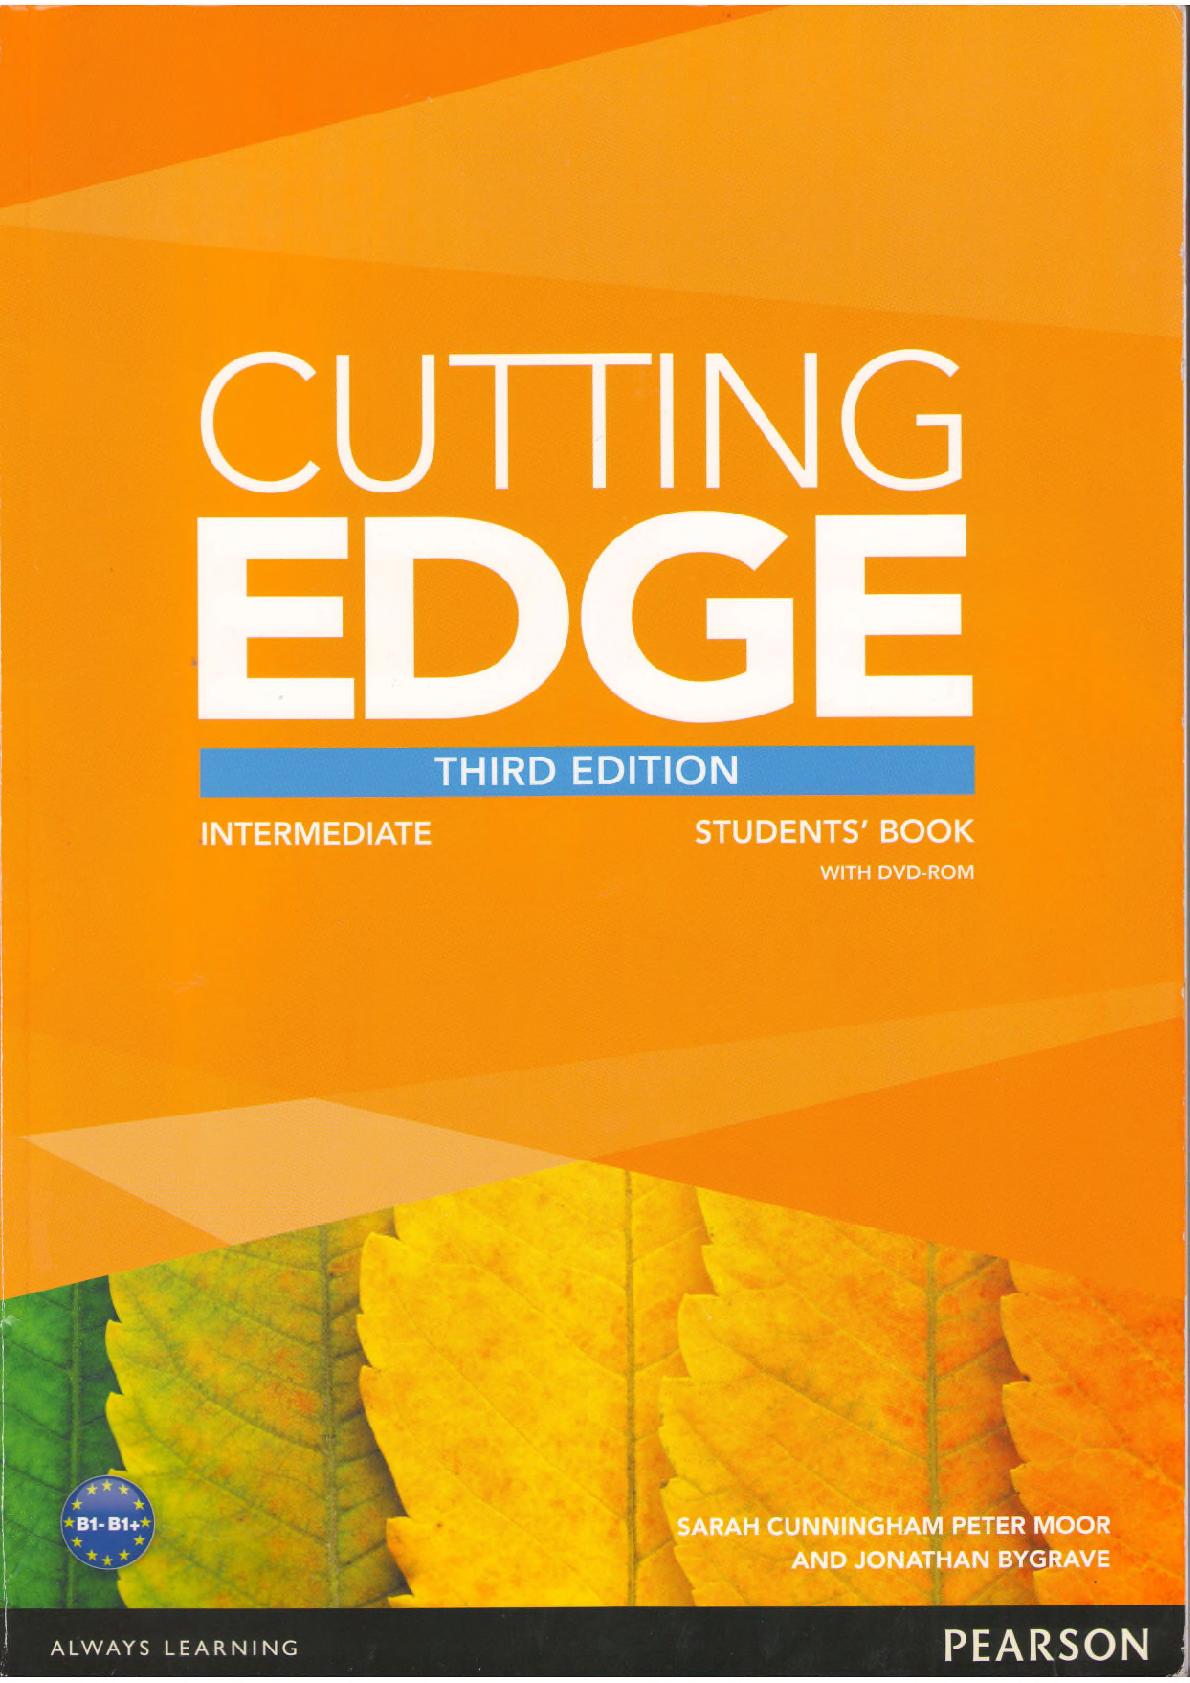 CUTTING EDGE 3rd Edition INTERMEDIATE Student's Book.pdf | PDF Host